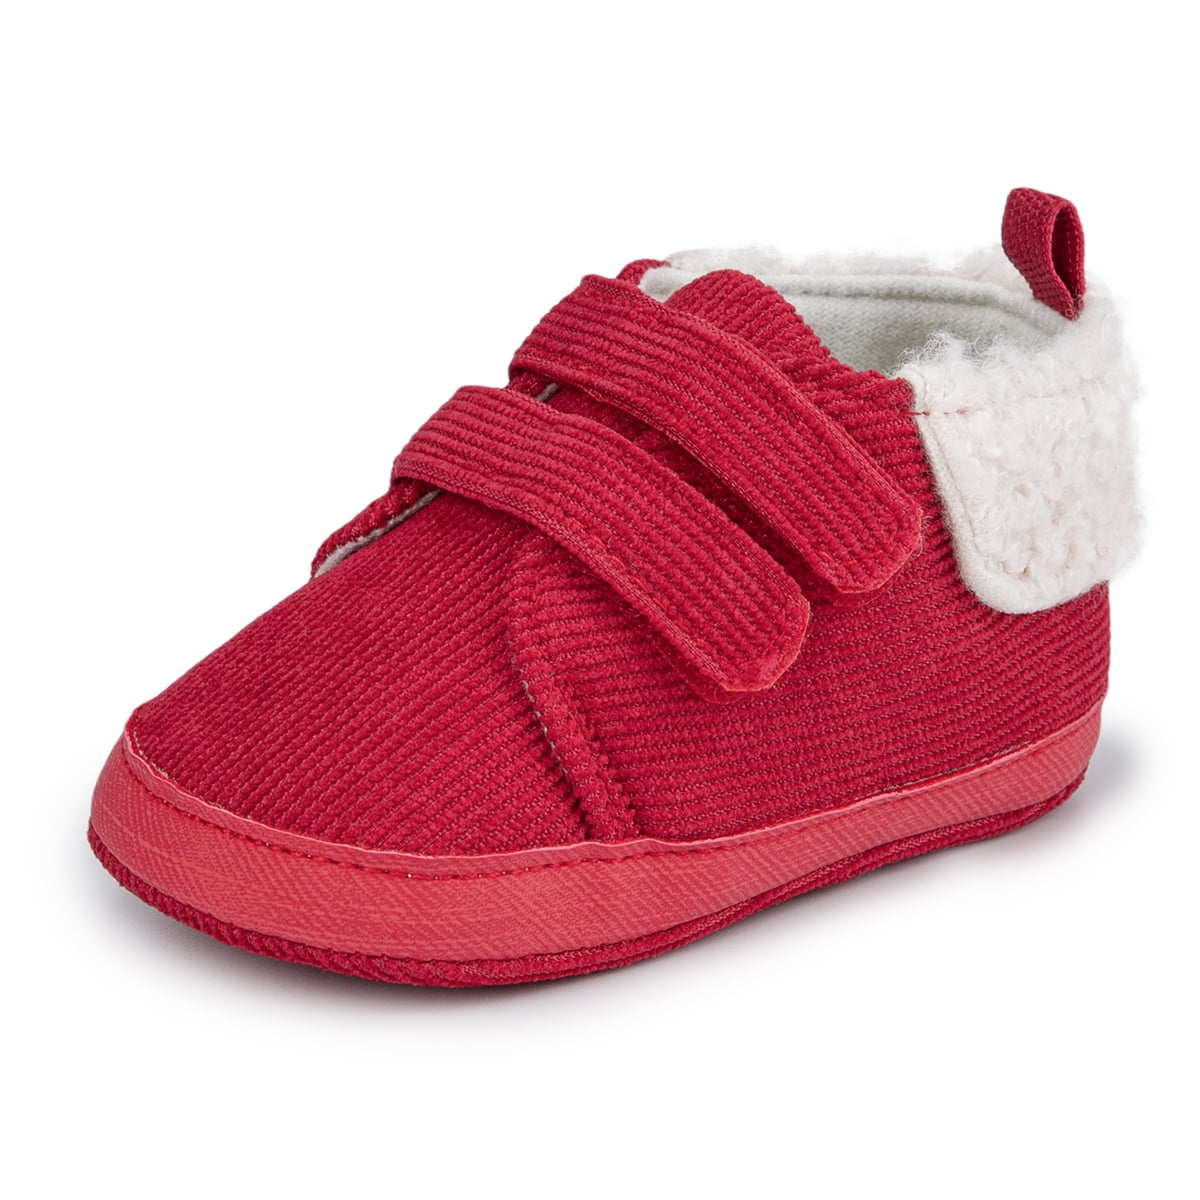 Meckior Baby Boys Girls Shoes Infant Warm Fleece Boots Newborn Winter ...